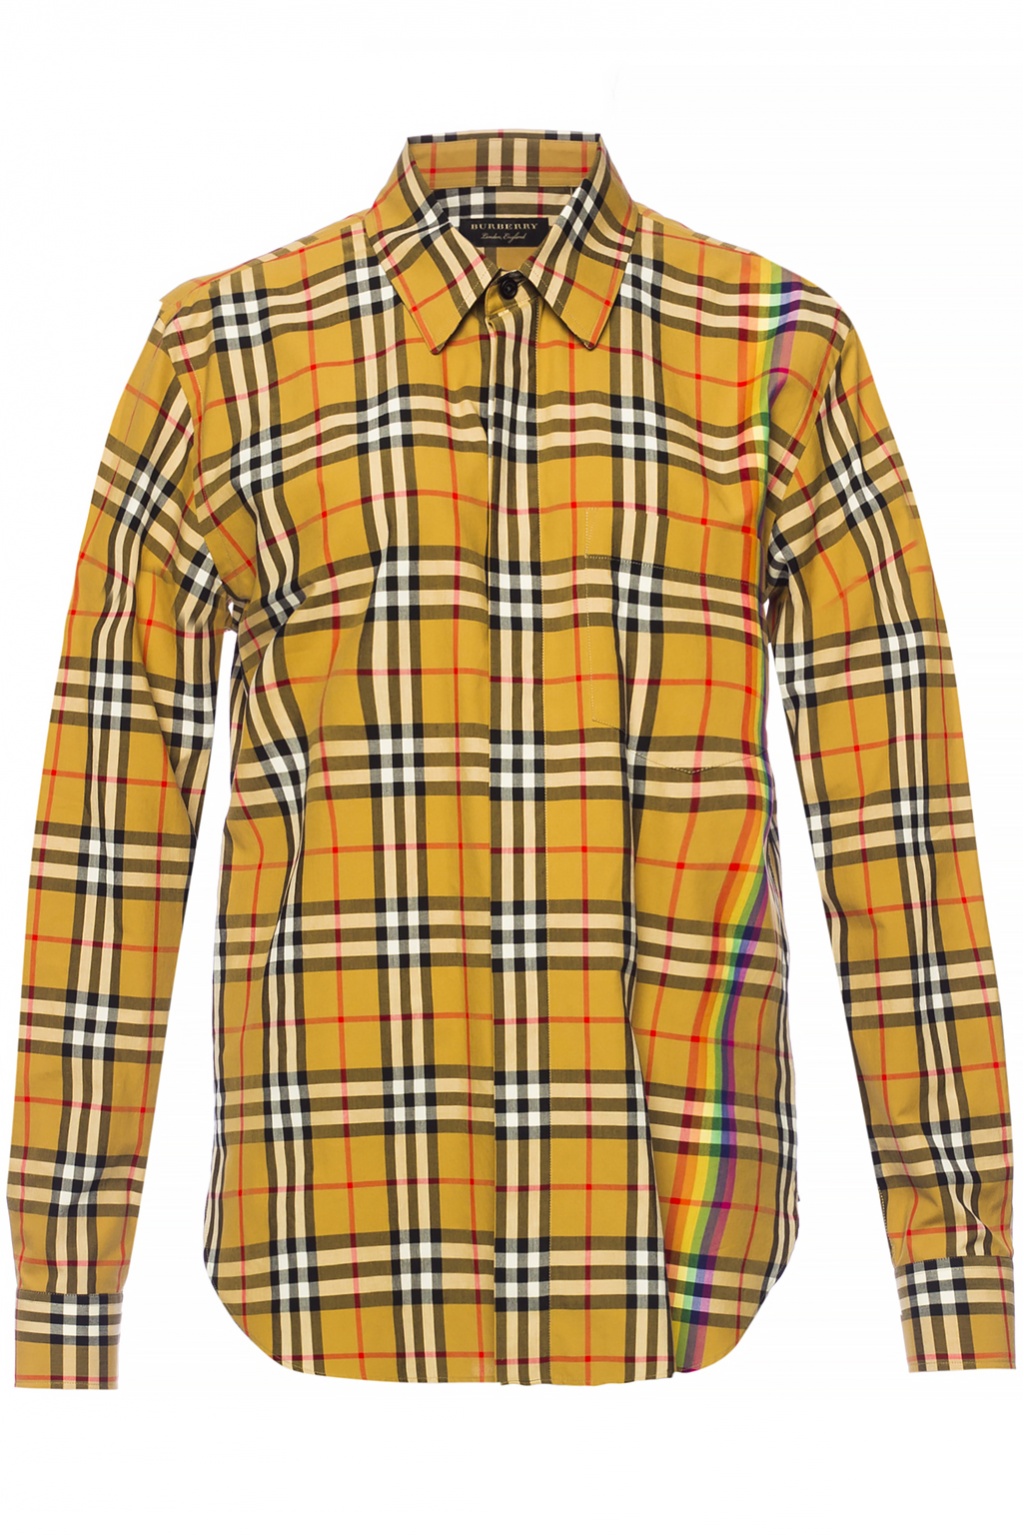 Brown Checked shirt Burberry - Vitkac TW